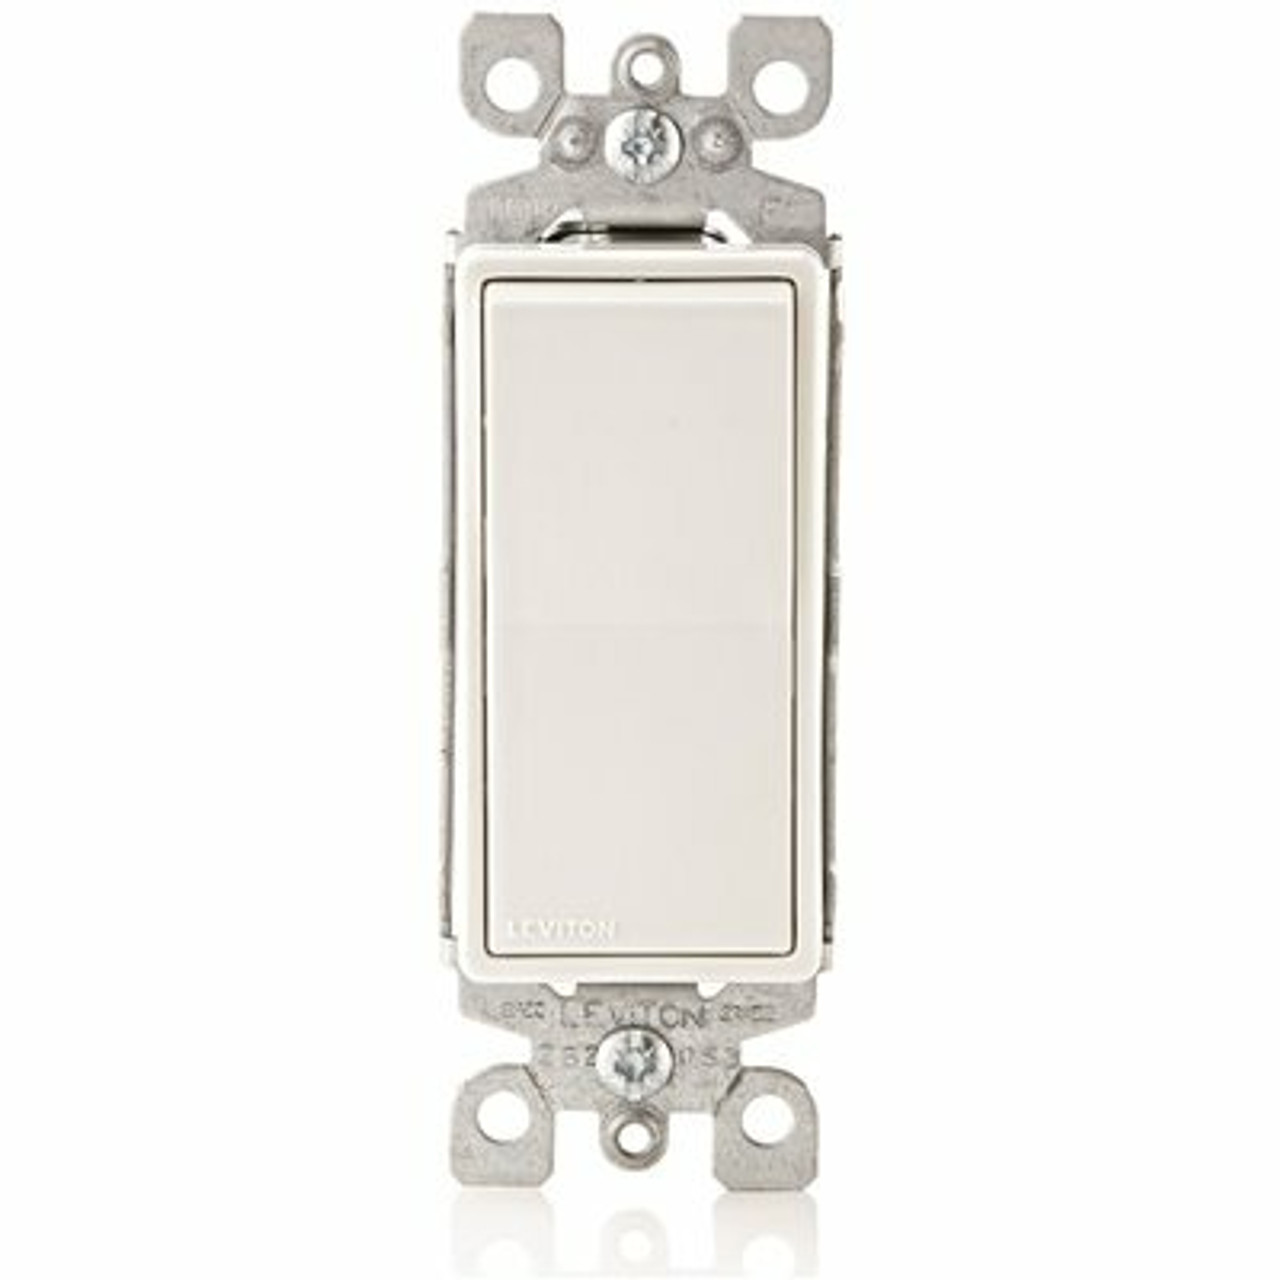 Leviton Decora 15 Amp Single Pole Rocker Ac Quiet Light Switch, White (10-Pack)